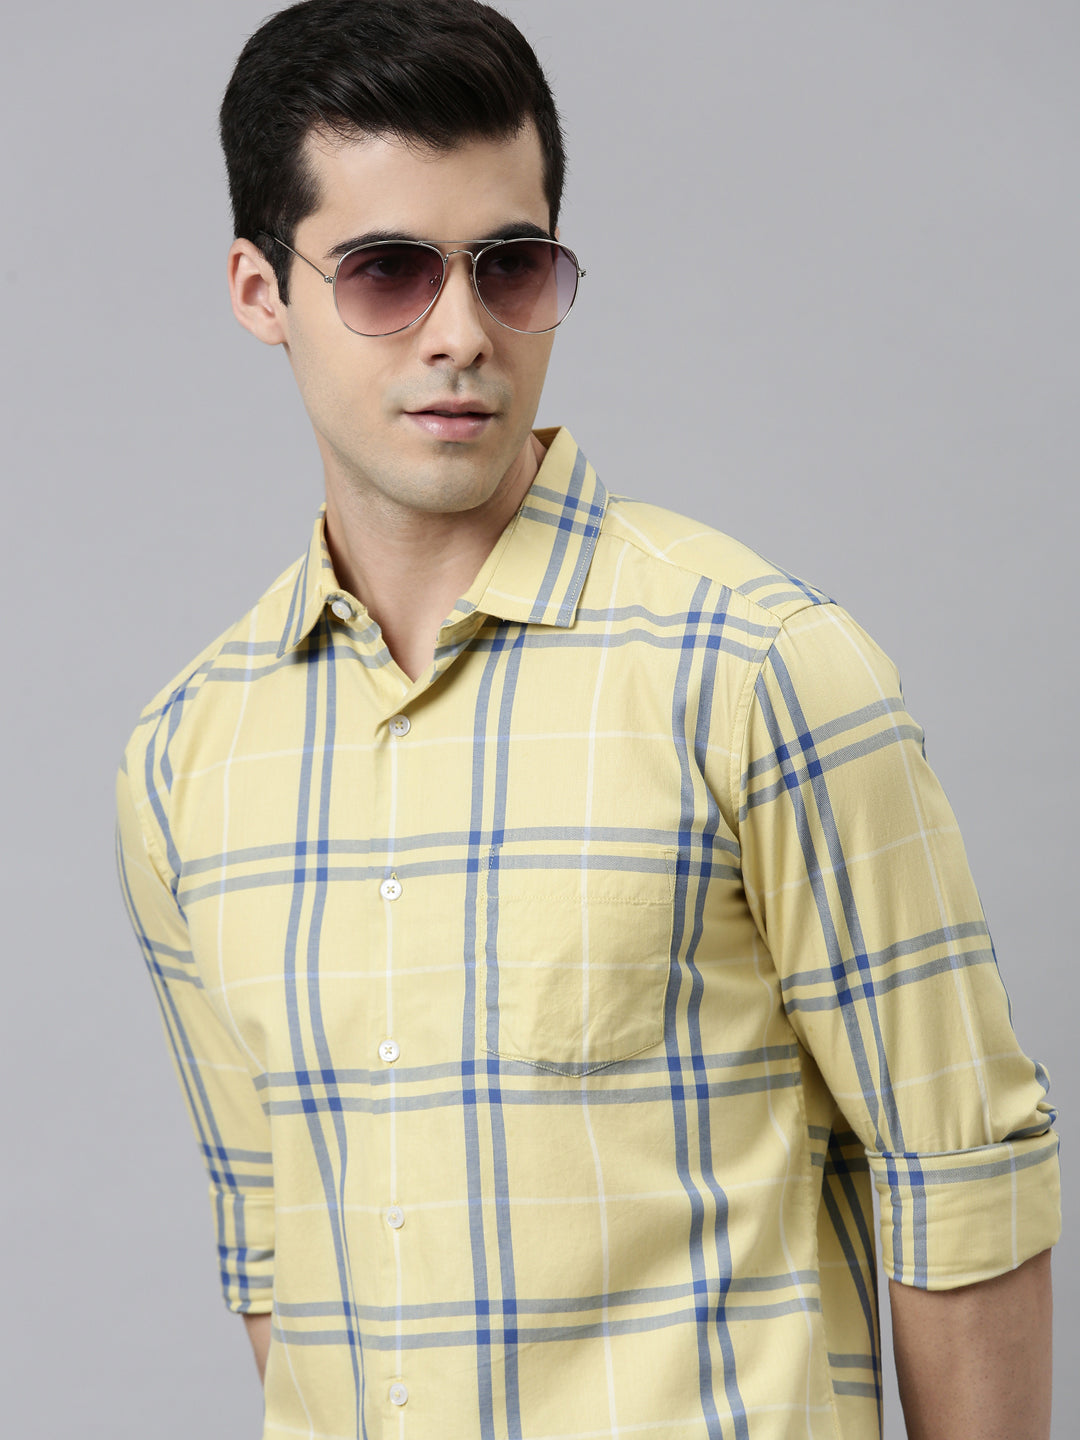 Heritage Yellow Checks Shirt Checks Shirt Bushirt   